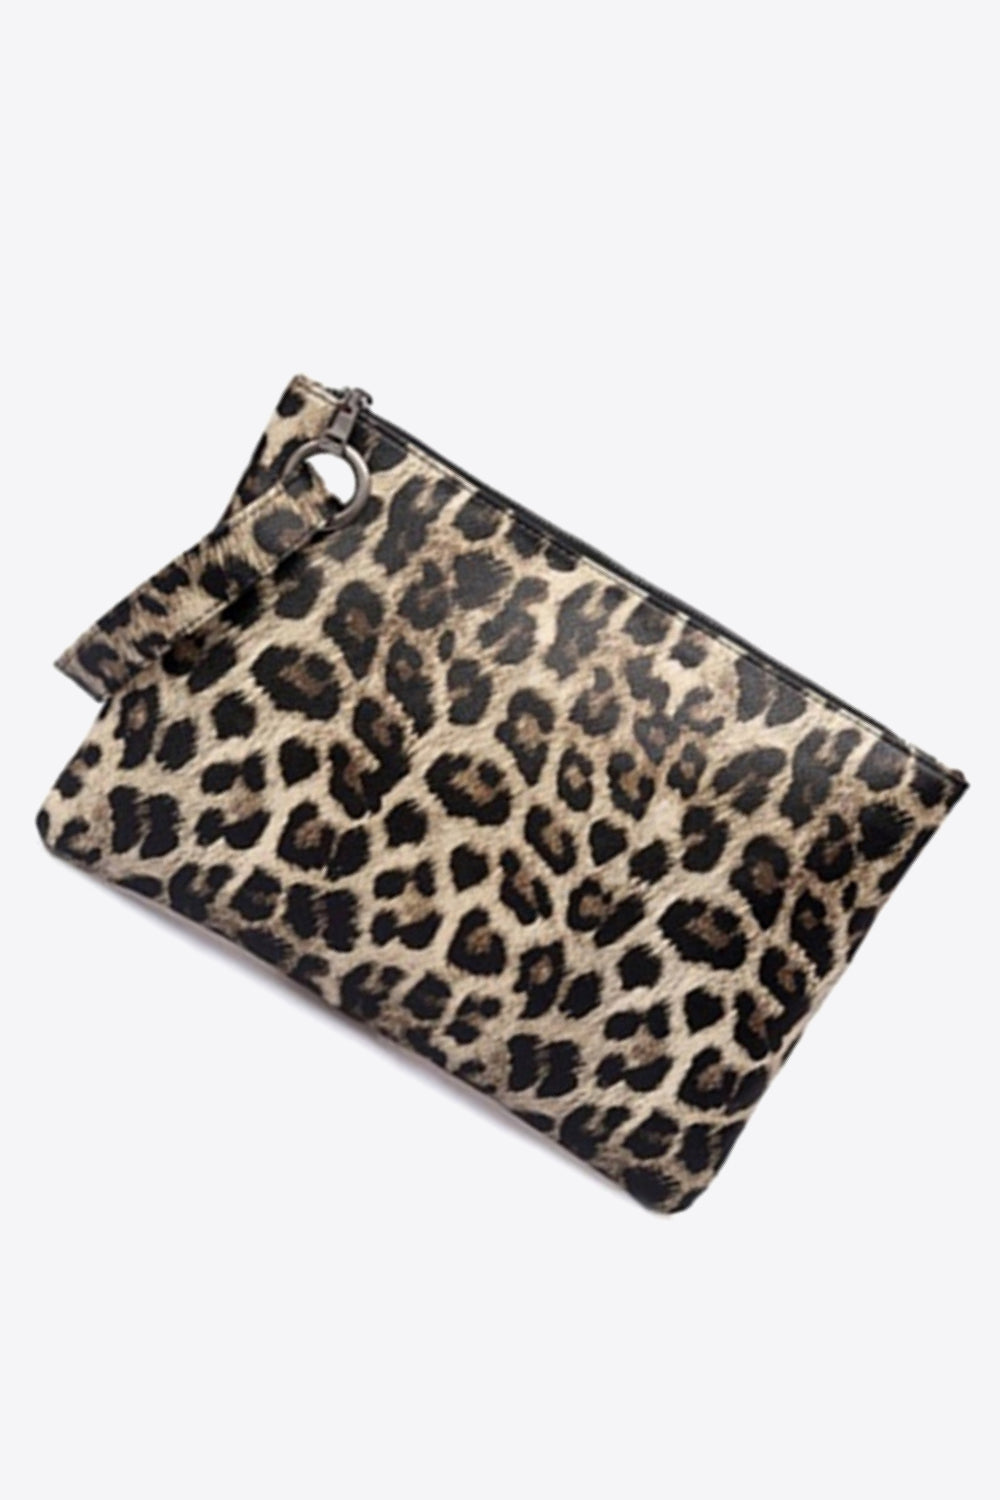 PREORDER- Leopard PU Leather Clutch